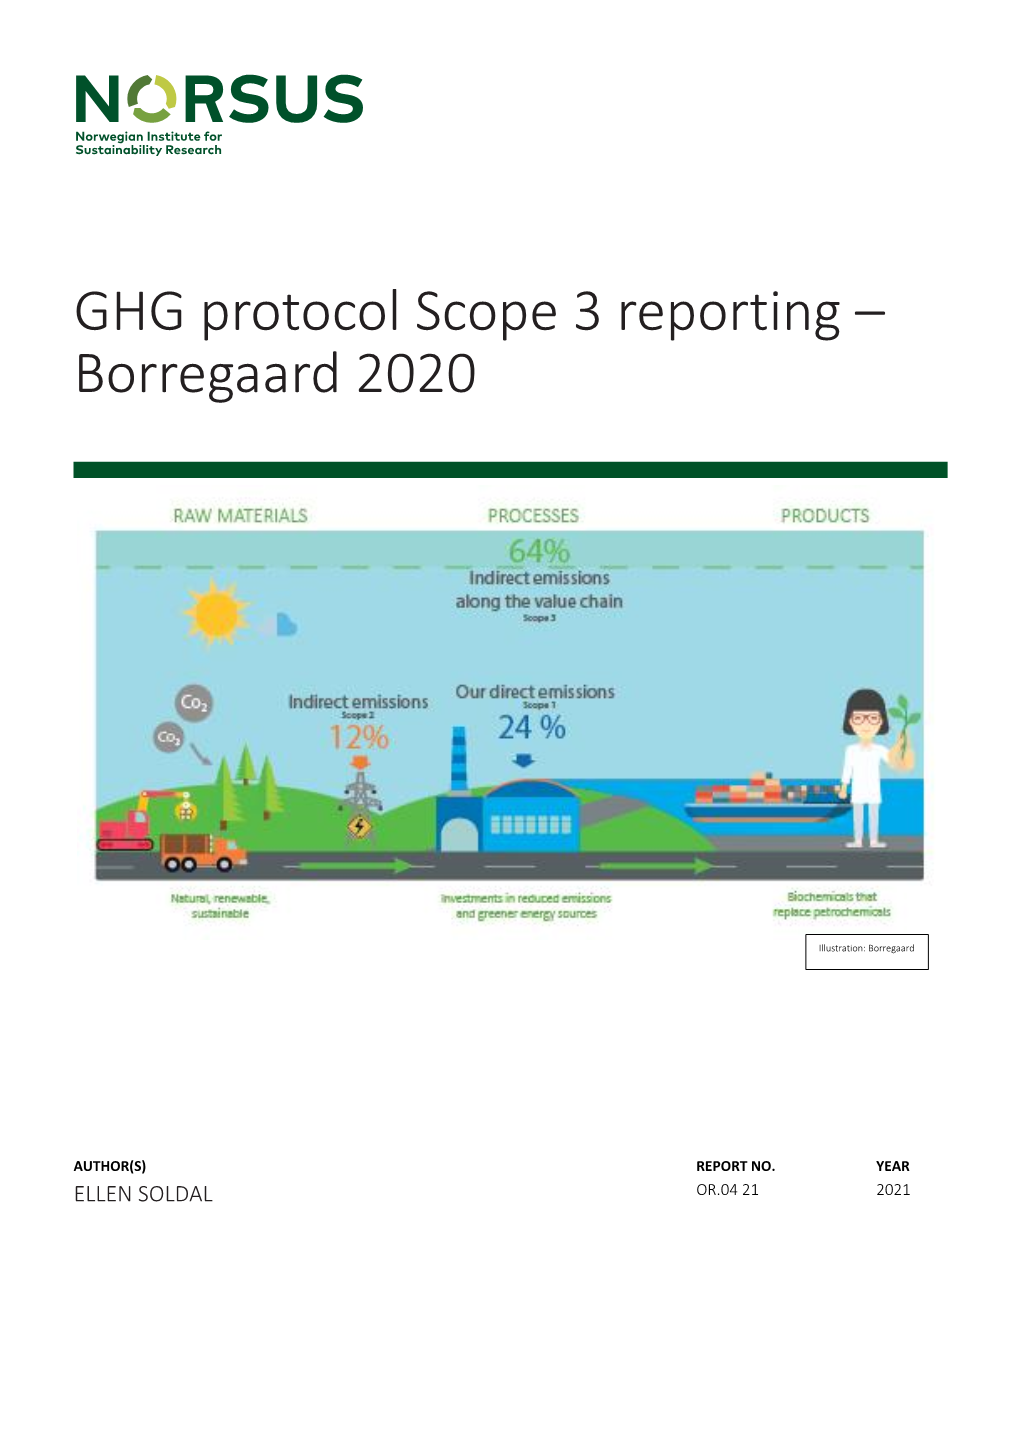 GHG Protocol Scope 3 Reporting – Borregaard 2020